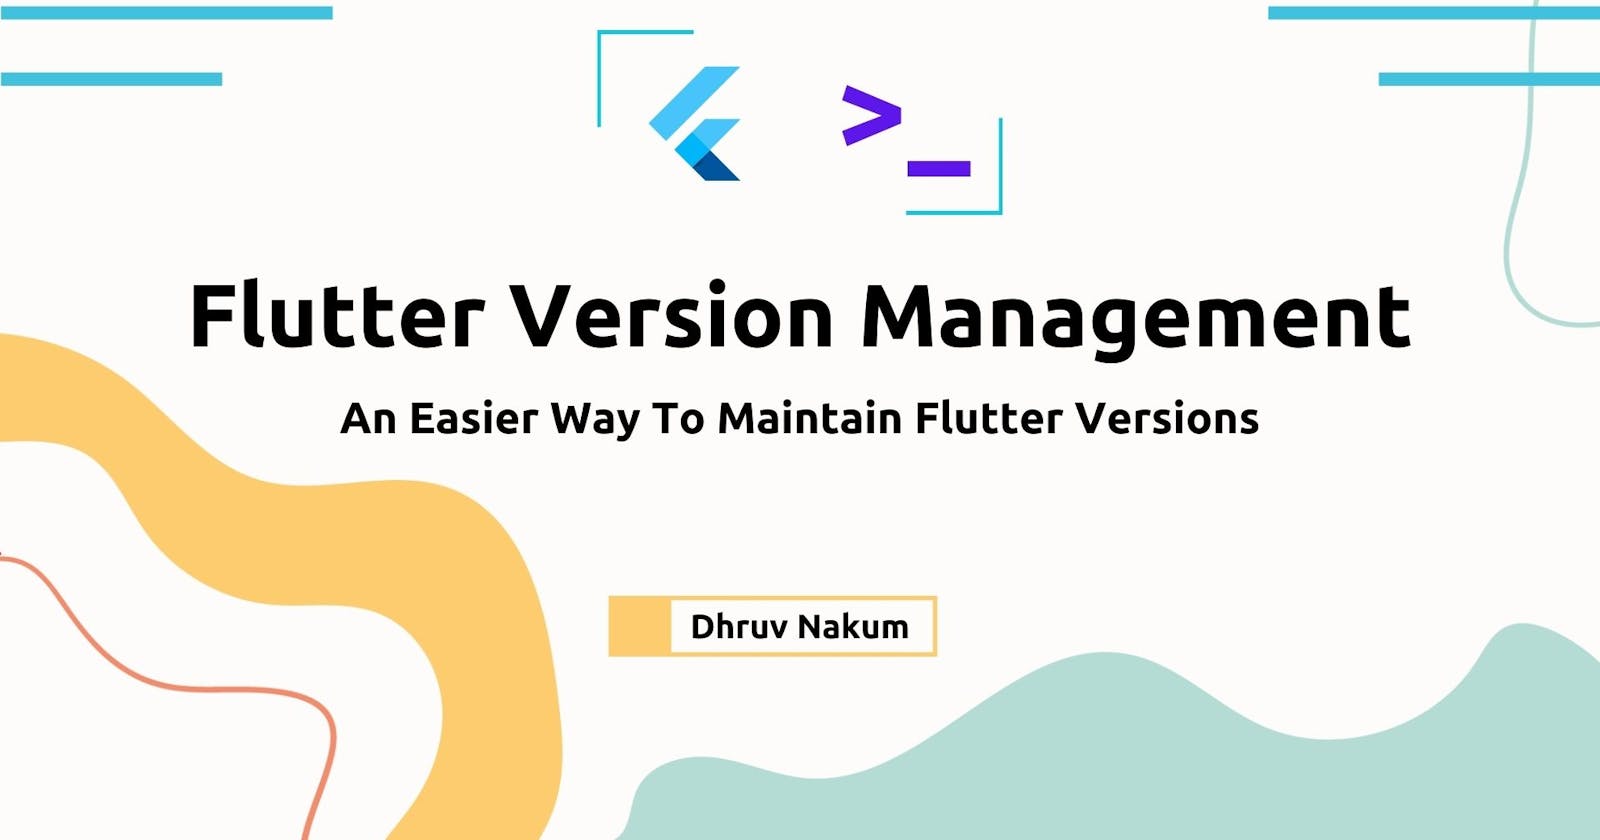 FVM (Flutter Version Management) - An Easier Way To Maintain Flutter Versions